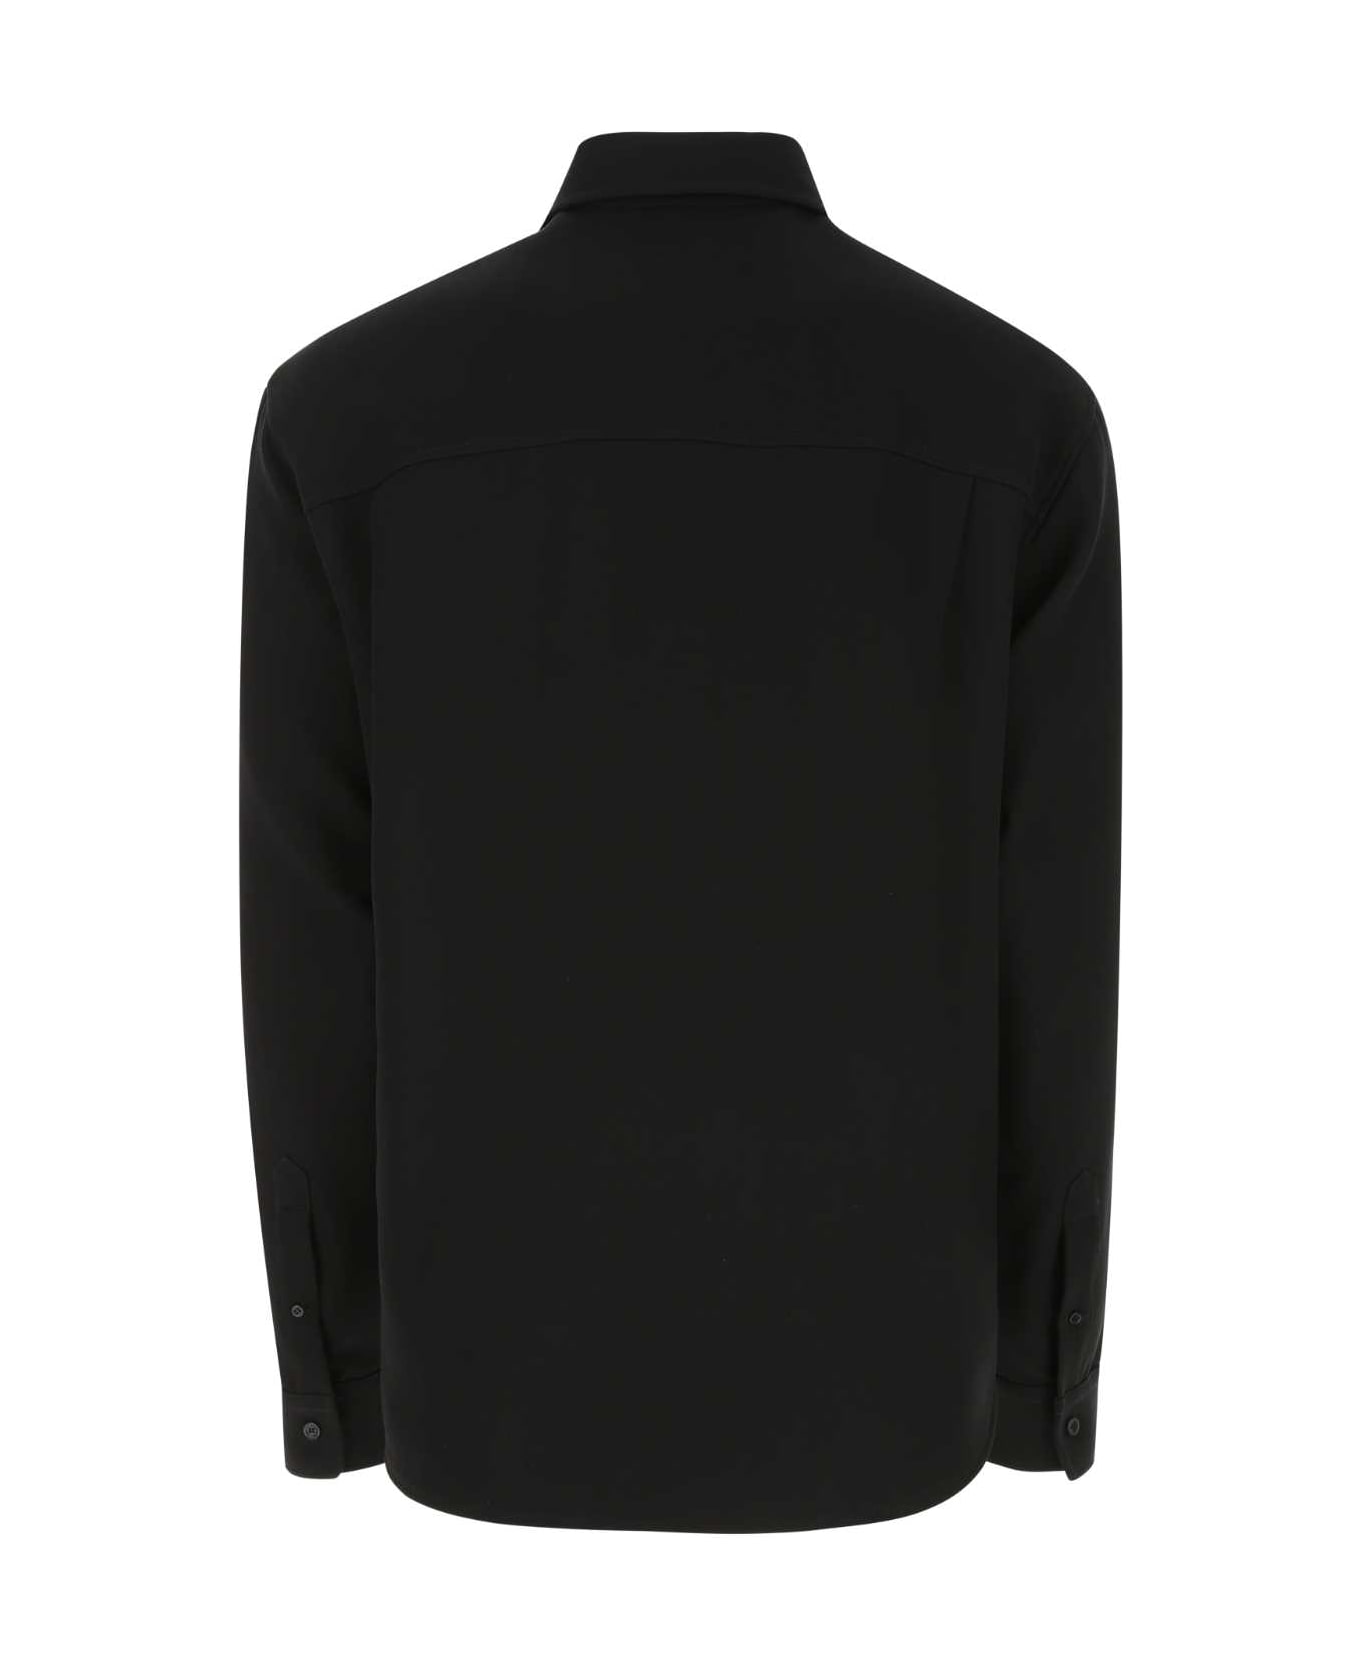 Balenciaga Black Wool Blend Shirt - 1000